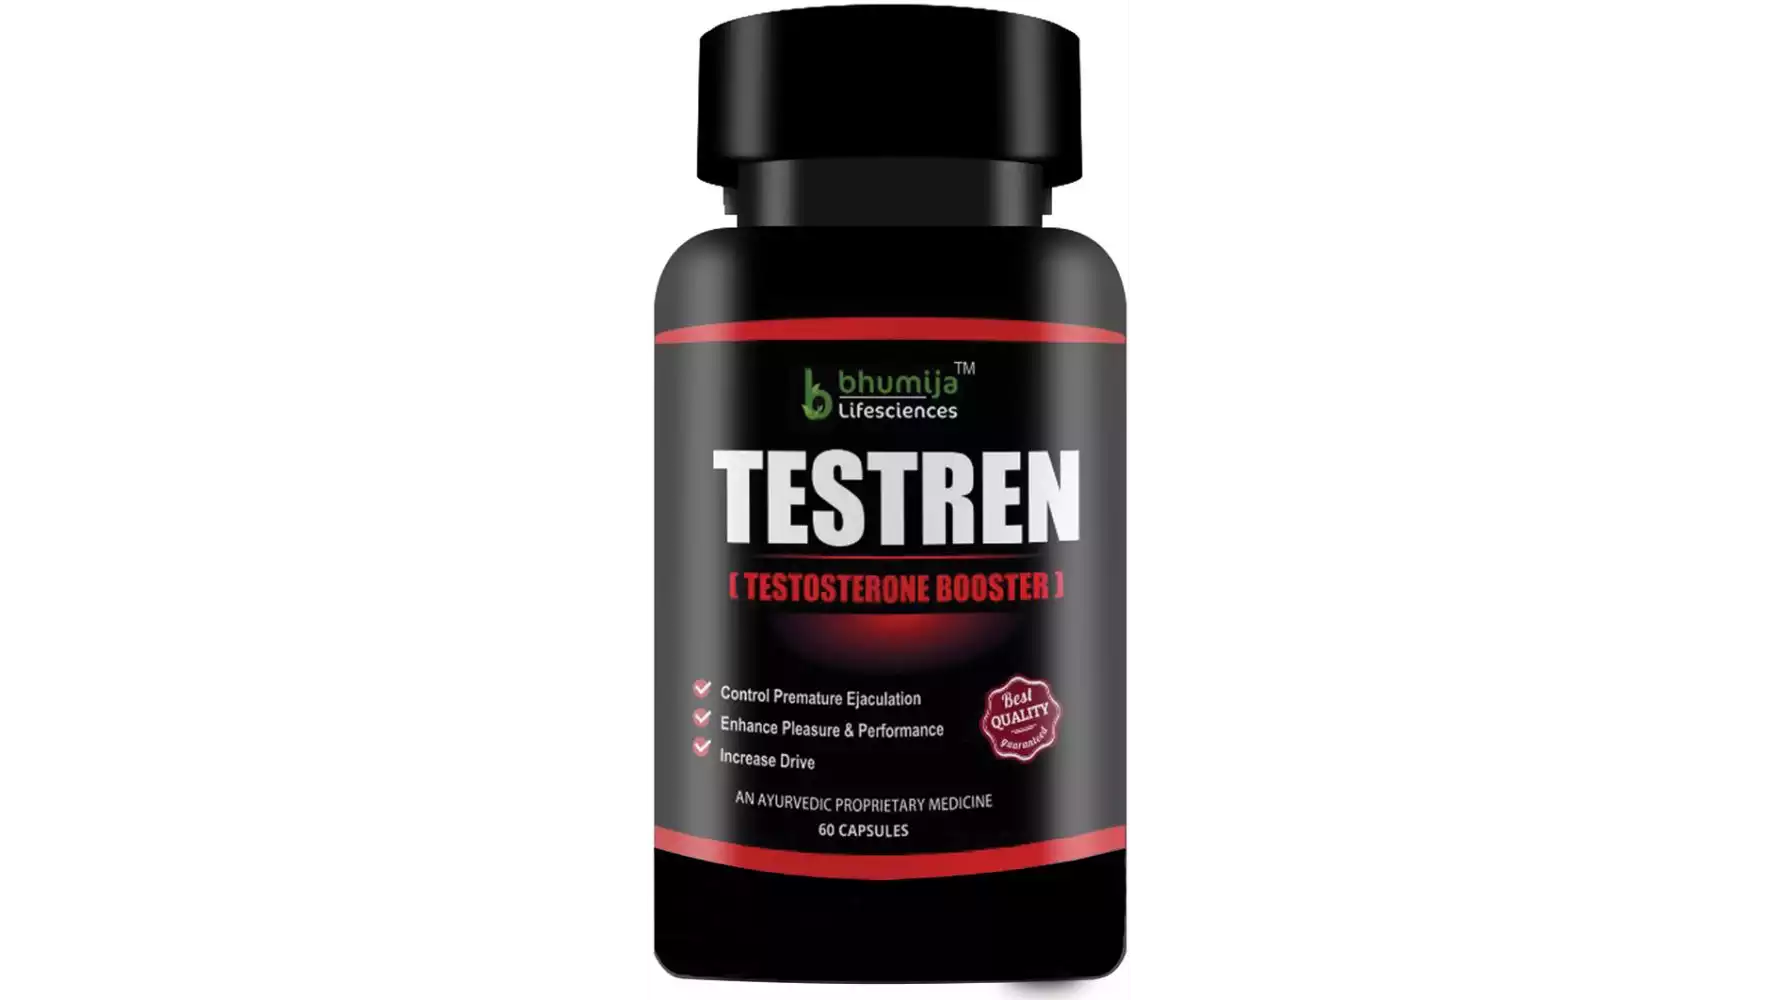 Bhumija Testren (Testosterone Booster) Capsule (60caps)